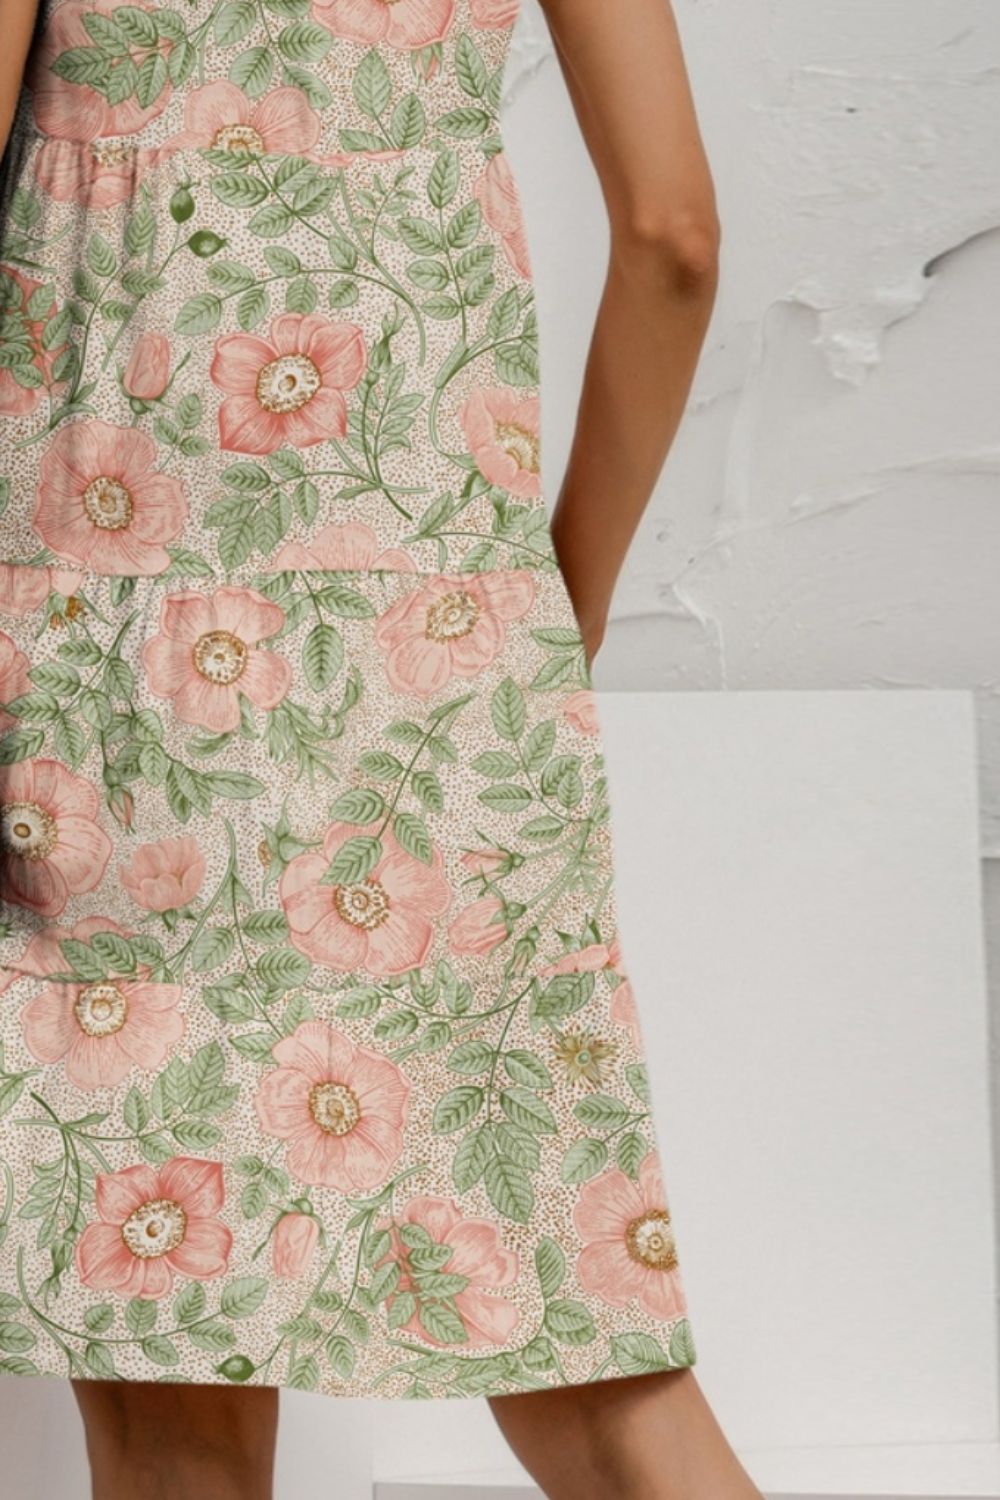 Tiered Printed Round Neck Sleeveless Dress